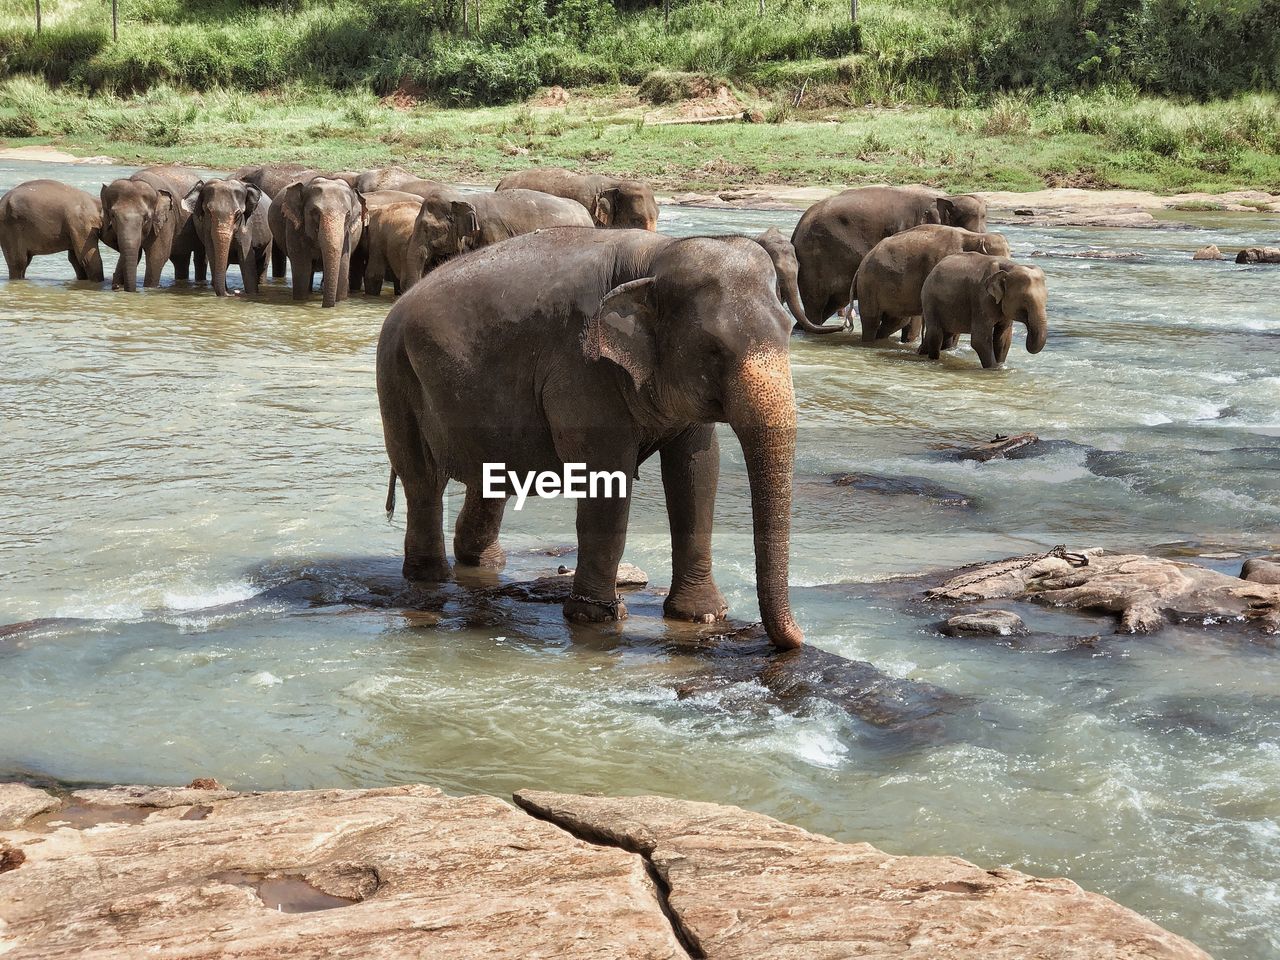 Elephant on riverbank